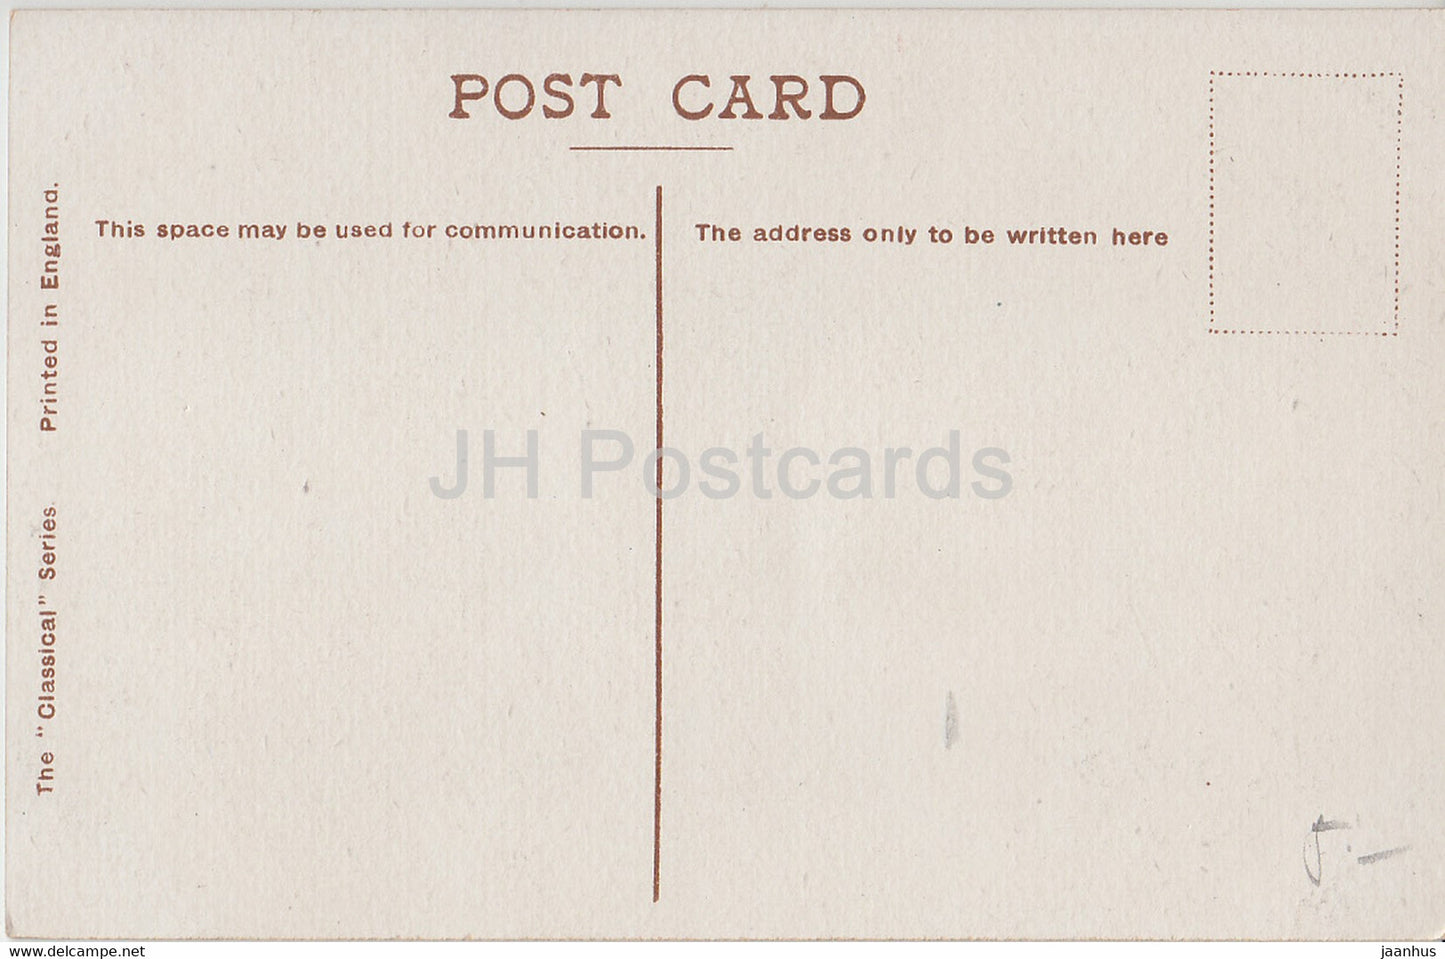 London - Bank of England & Royal Exchange - cars - old postcard - England - United Kingdom - unused